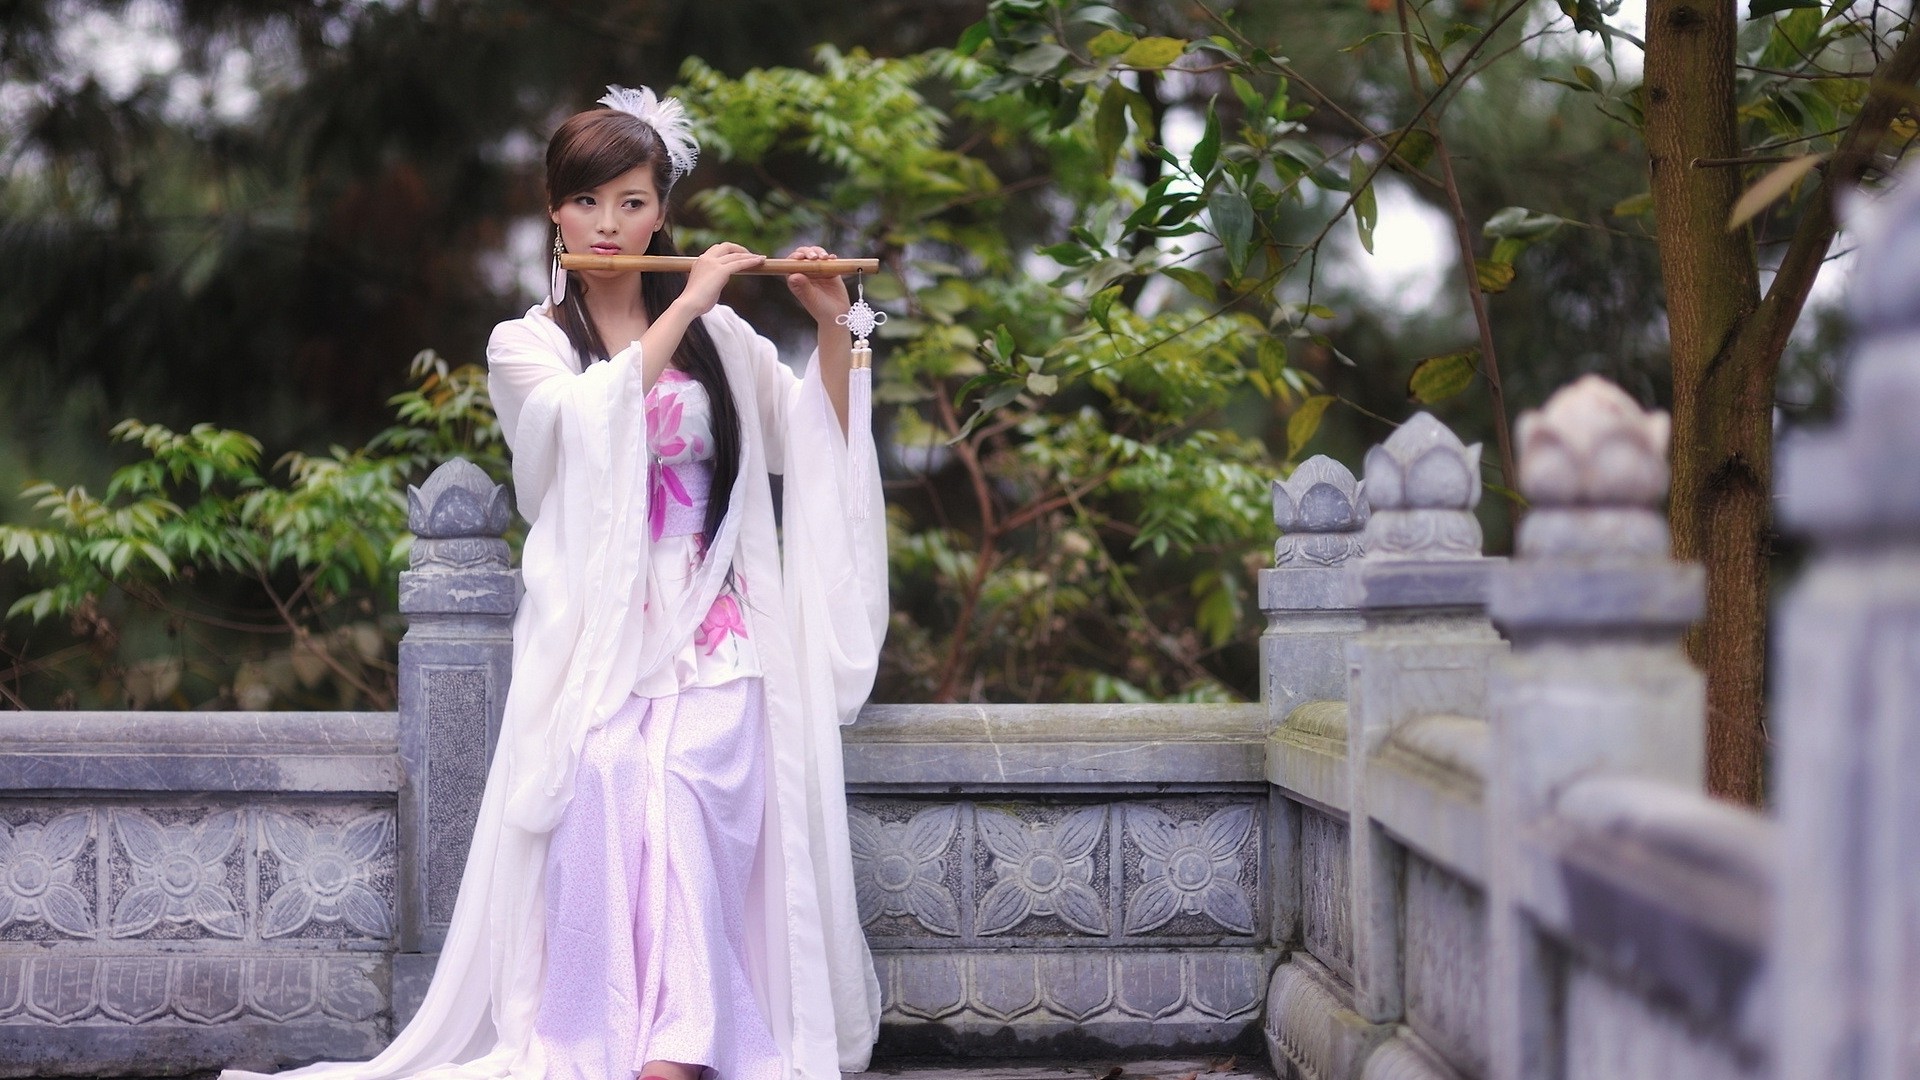 Women Model Brunette Long Hair Asian Women Outdoors Musician Flute White Dress Trees Playing Barrett 1920x1080